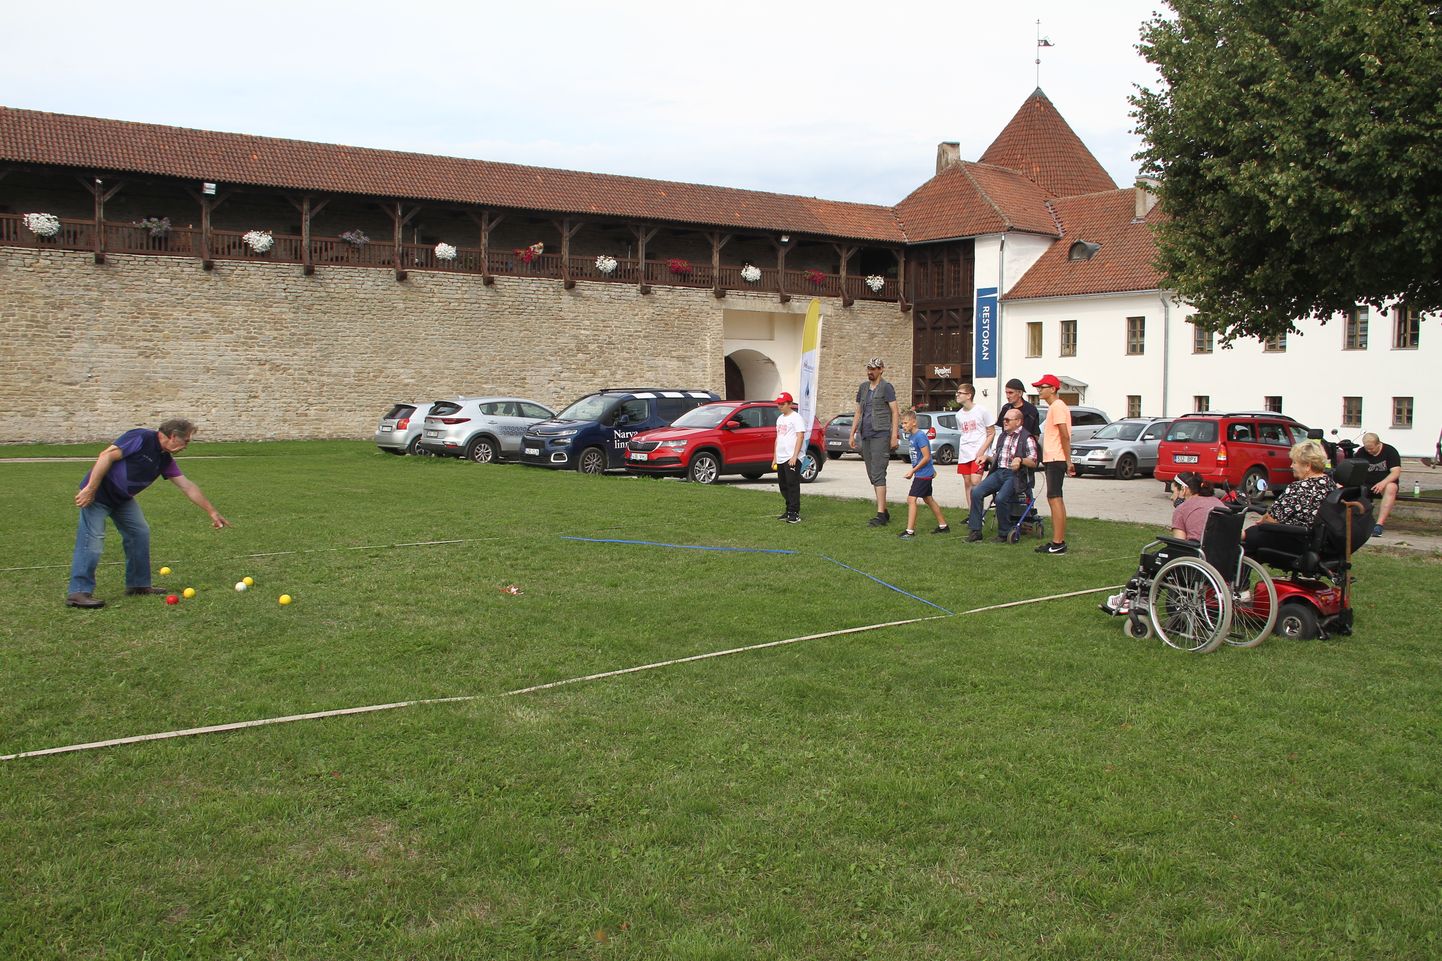 Участники нарвских клубов инваспорта и спортклуба по карате вместе играют в бочче.